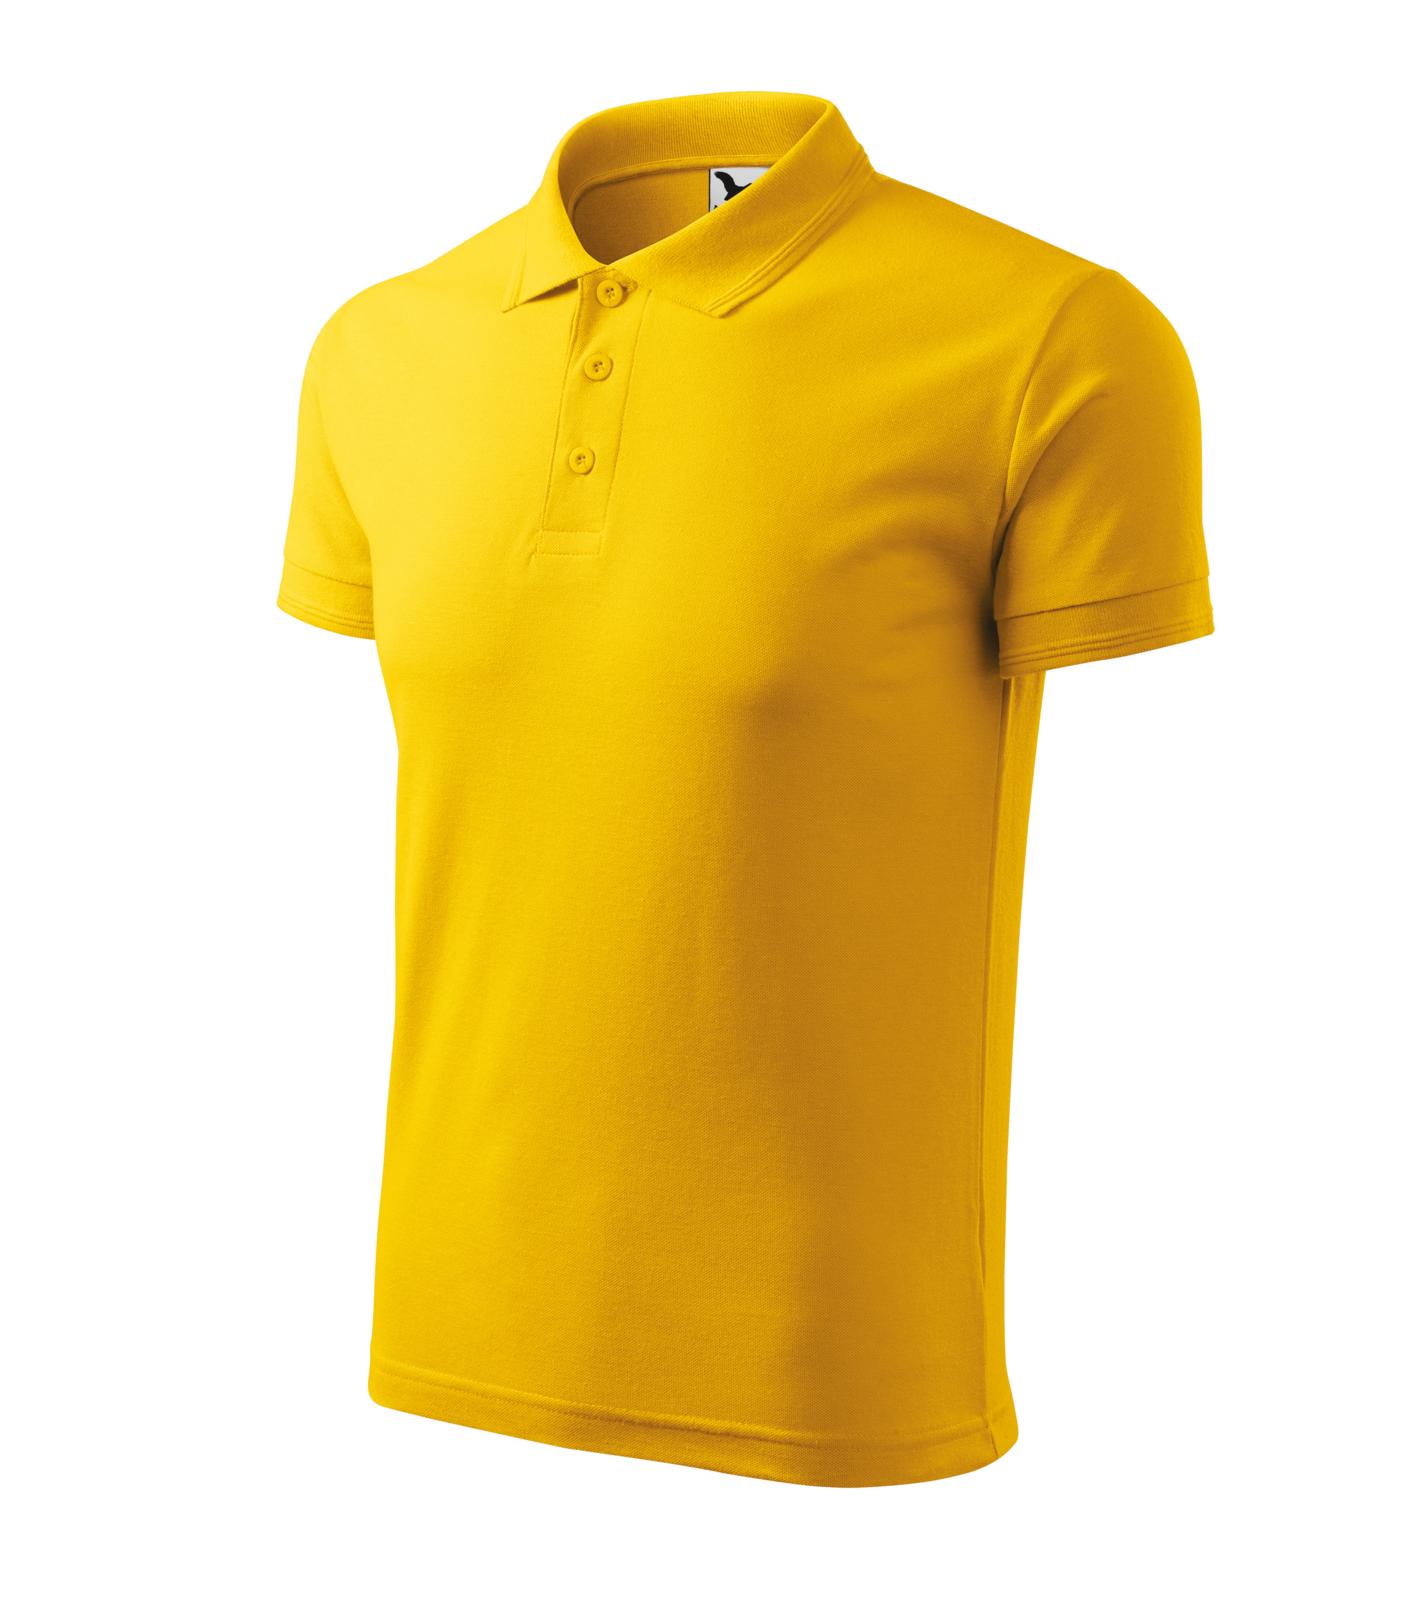 Pique Polo Polokošile pánská Barva: žlutá, Velikost: 2XL